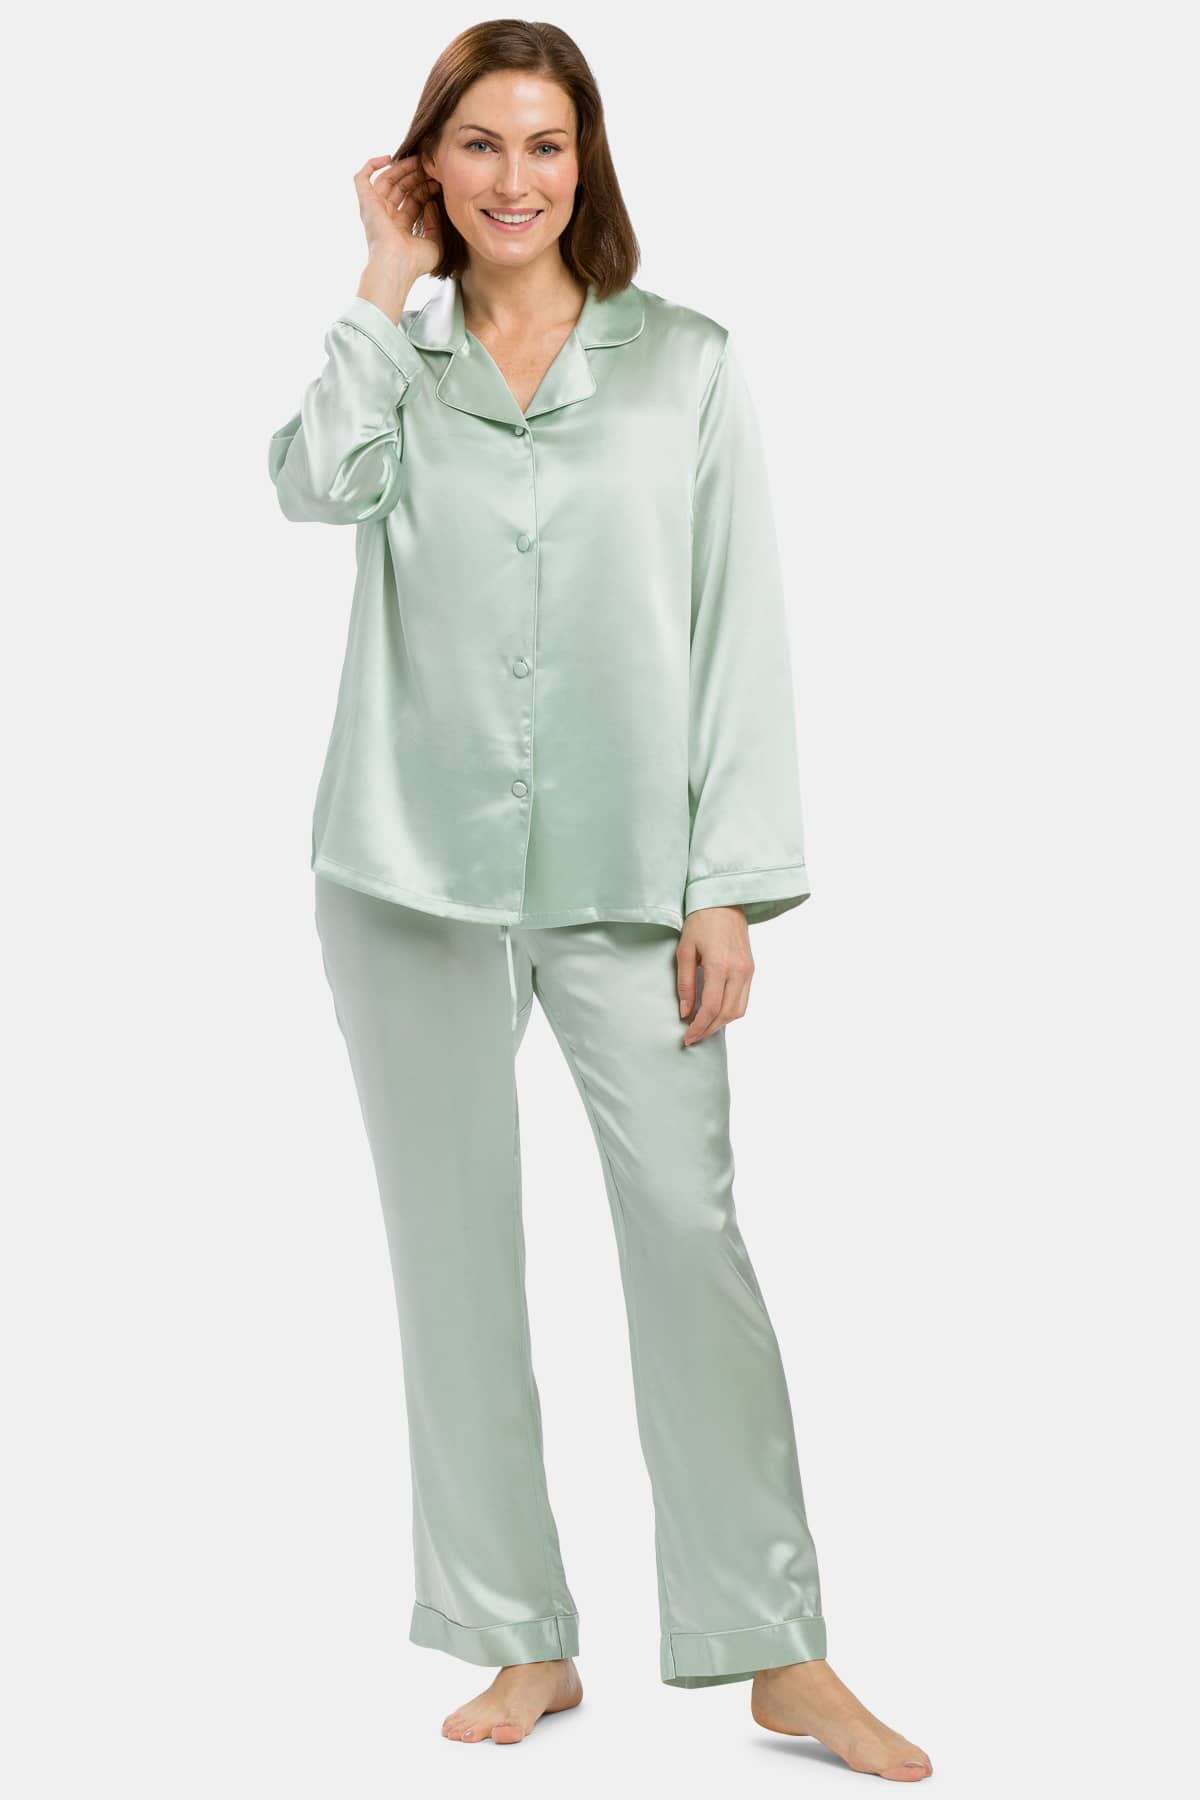 Buy Shapes and Curves Basic Silk Pajama Long Pants Set Lounge Wear